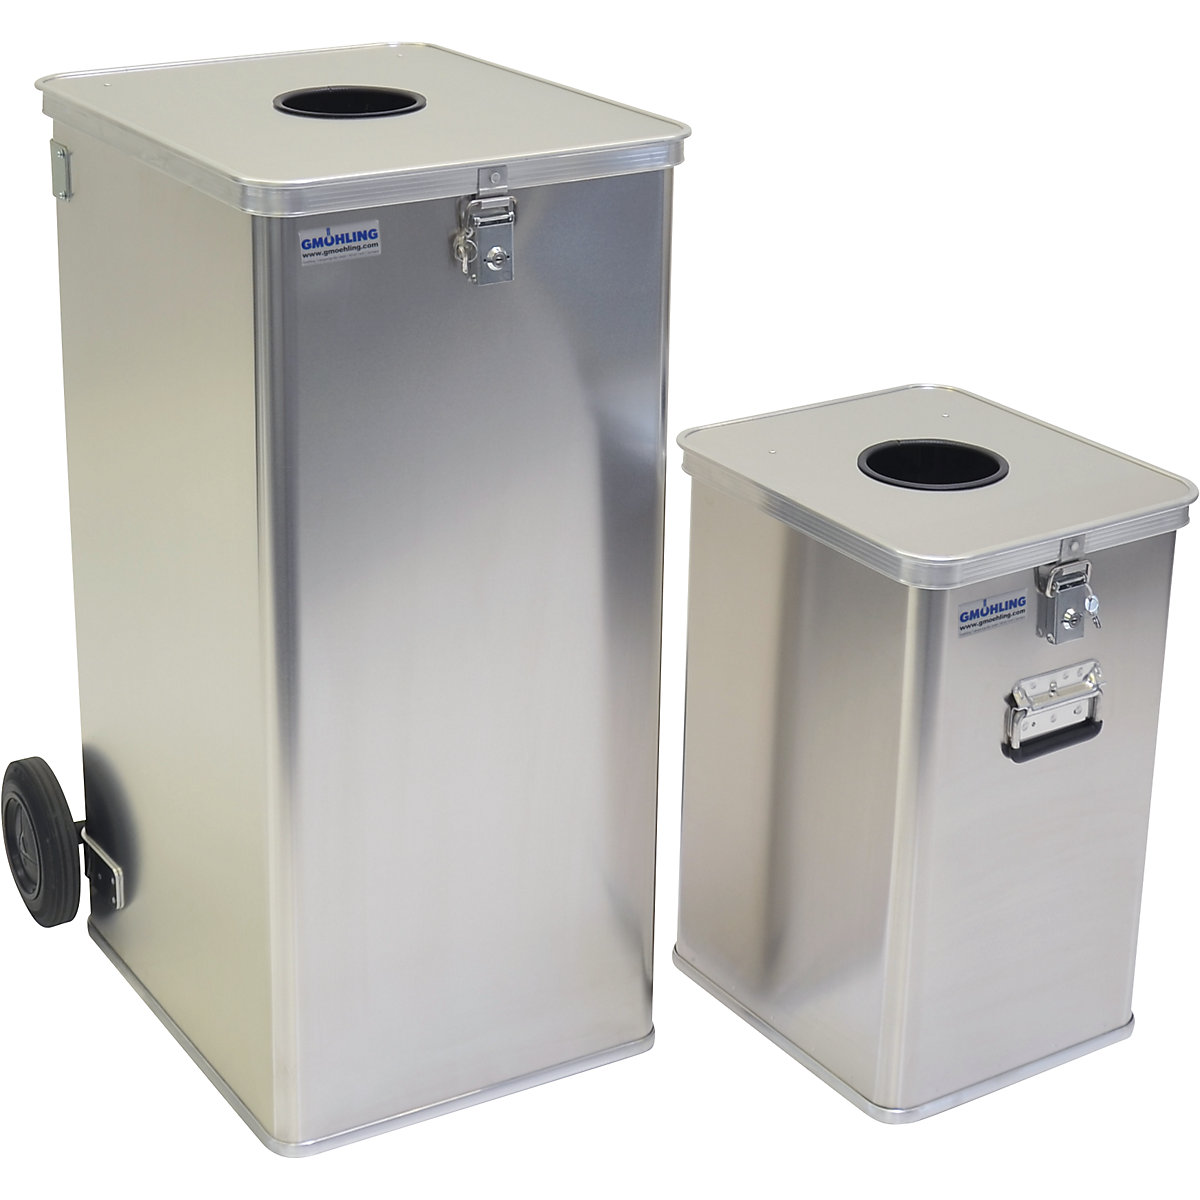 Contentor de lixo/recipiente para resíduos G®-DROP – Gmöhling (Imagem do produto 11)-10